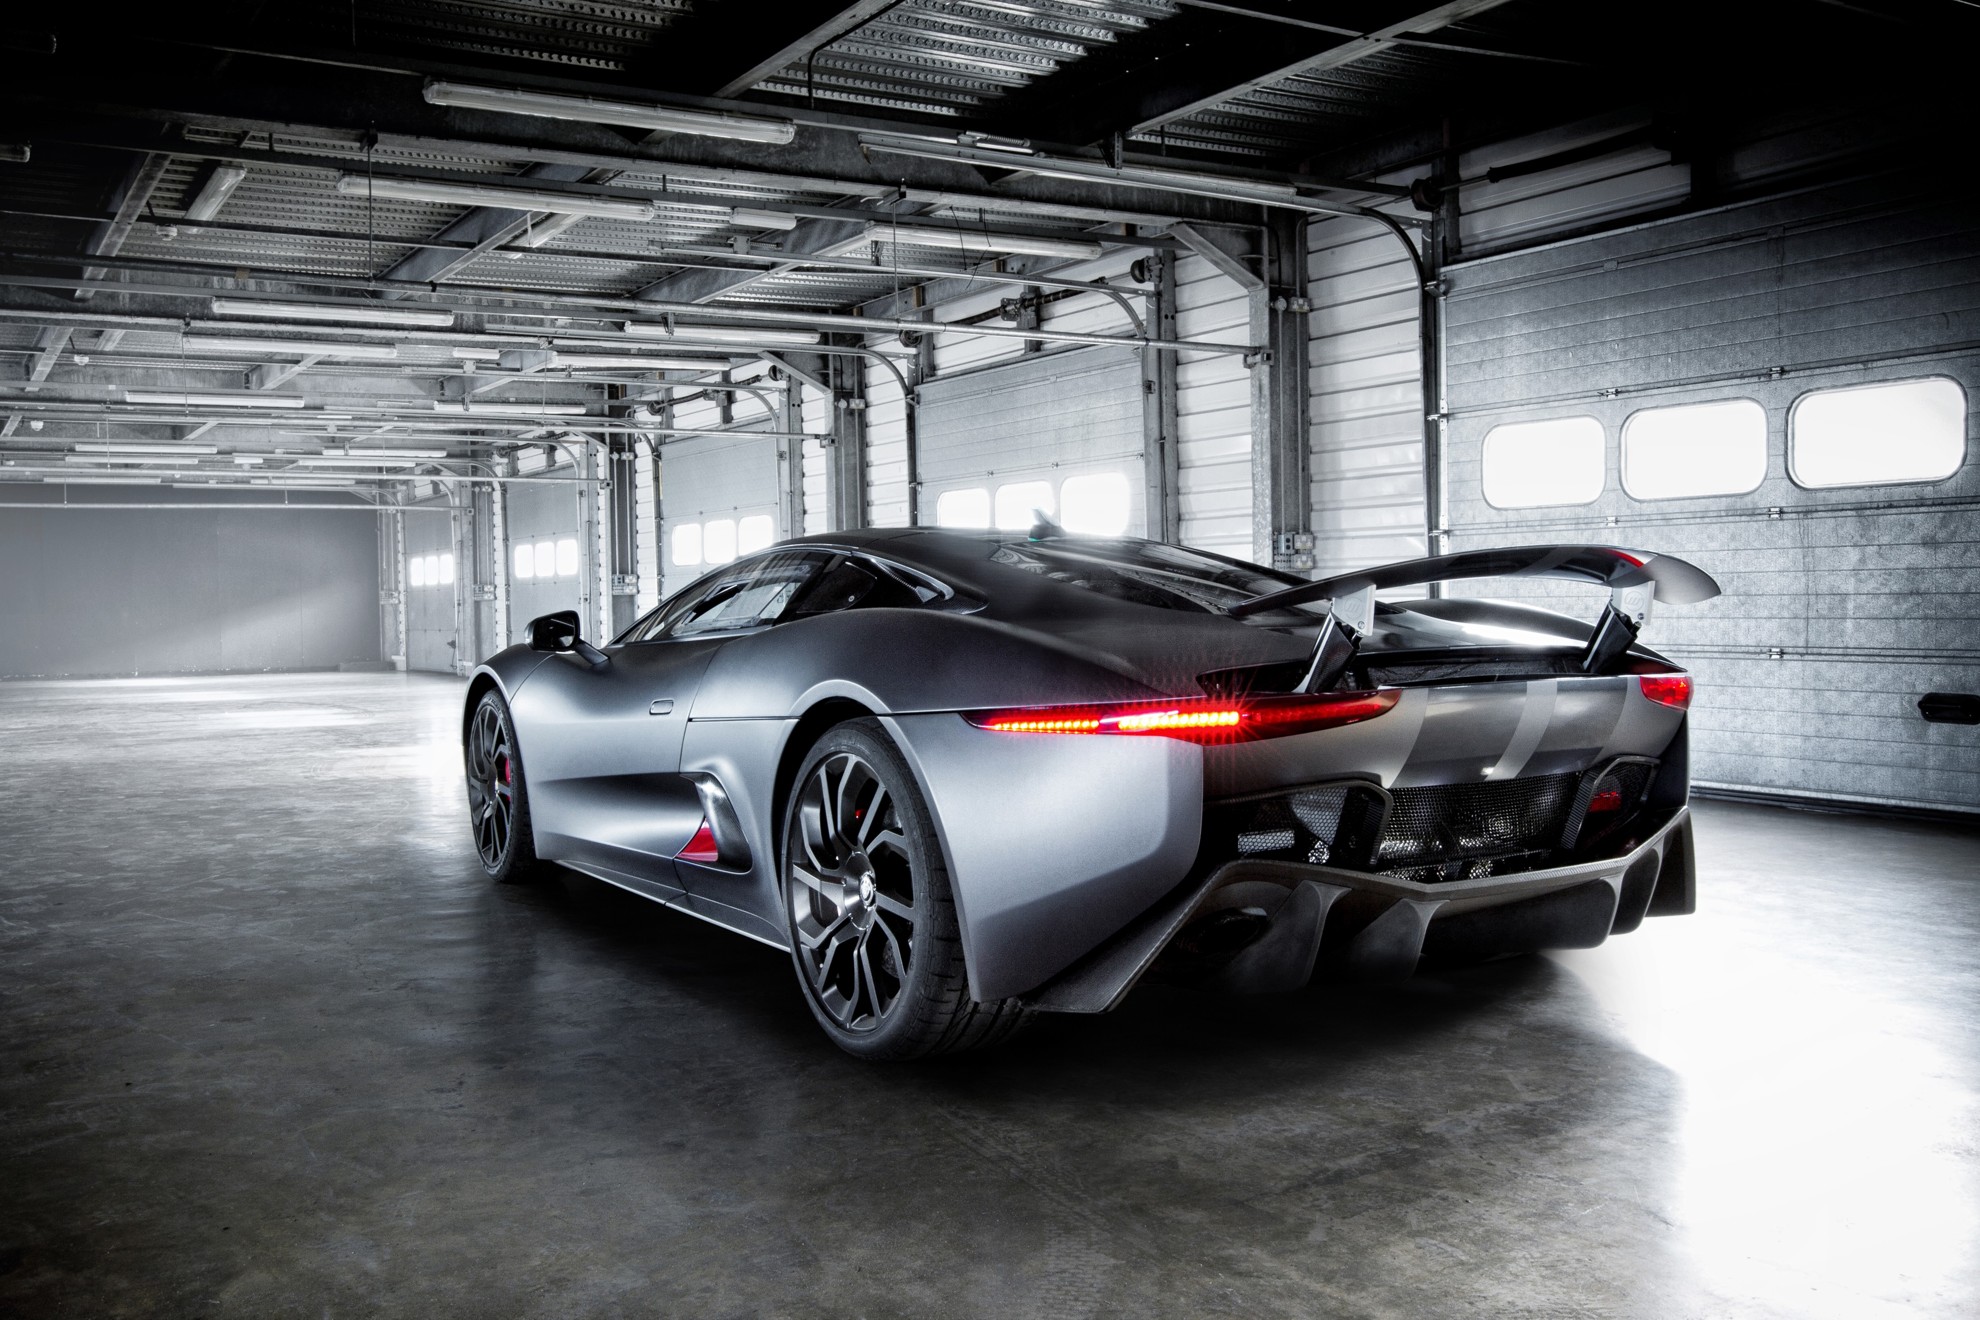 Jaguar ‘can become the Ferrari of JLR’